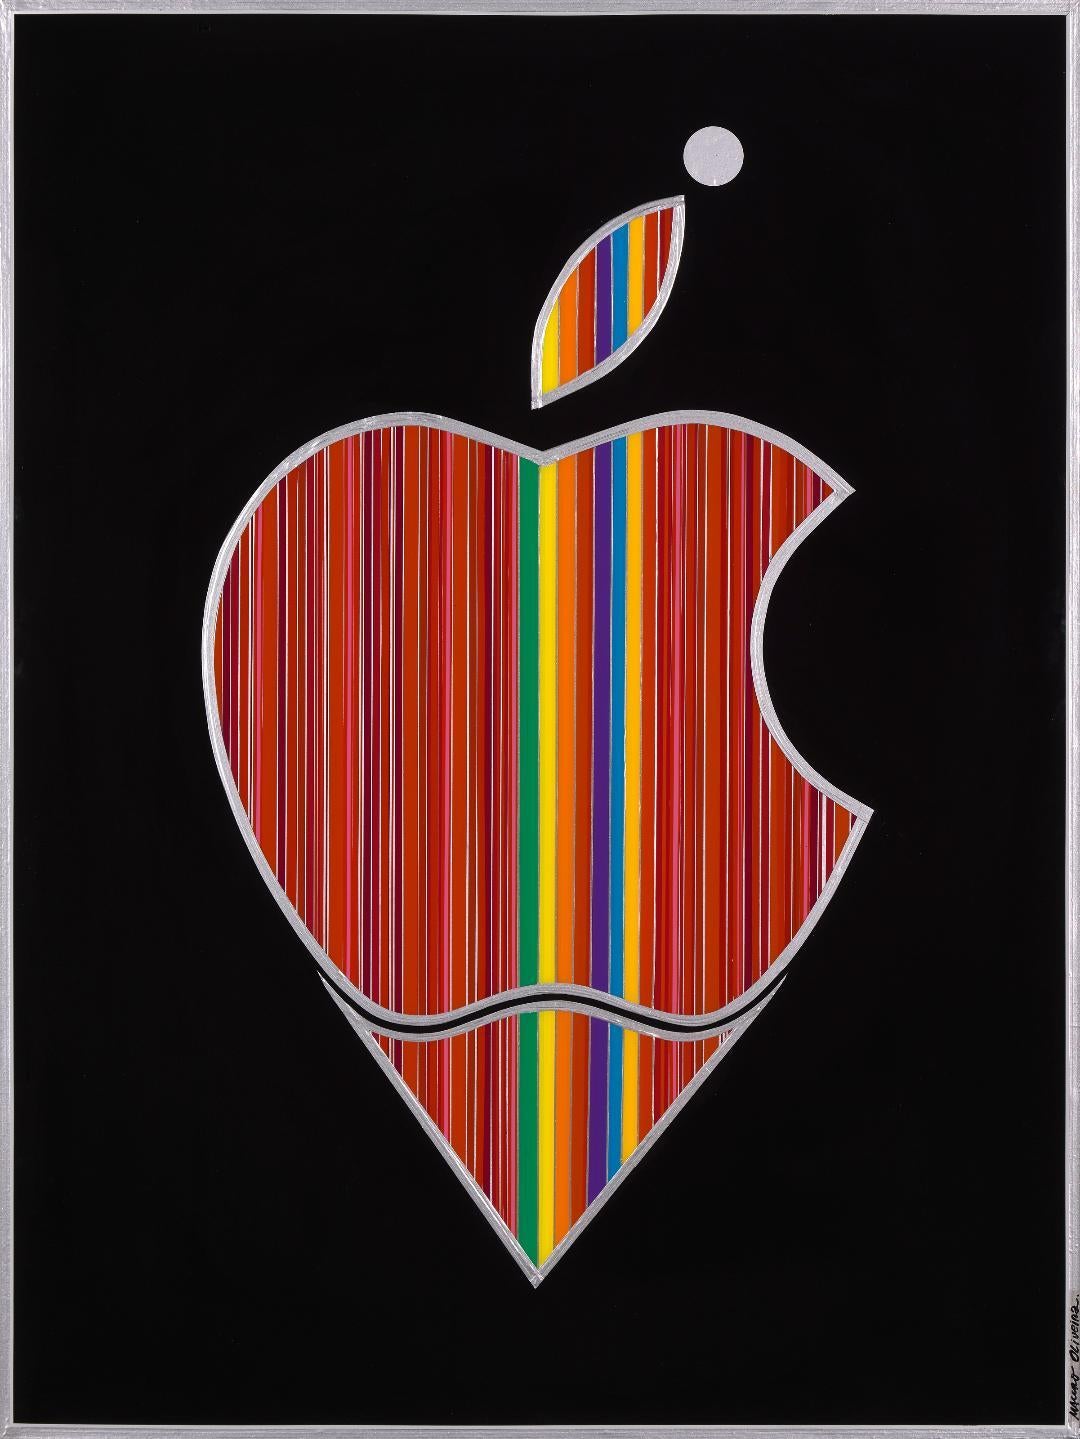 apple logo 1984